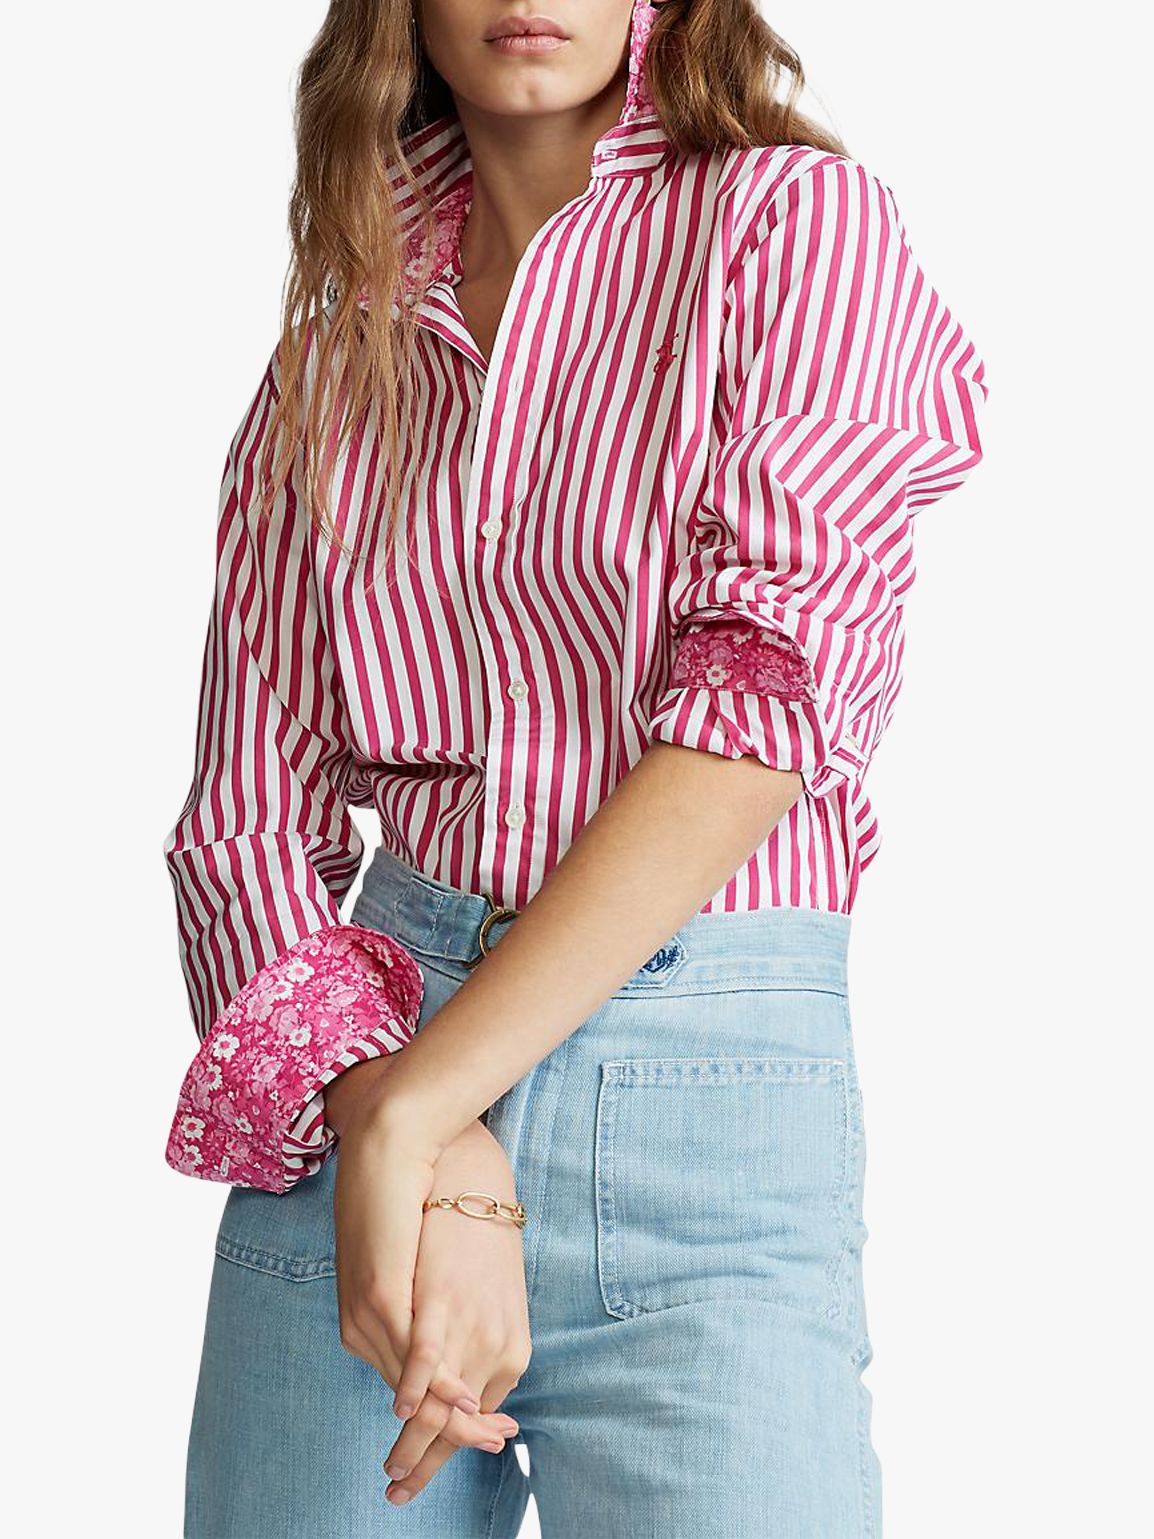 pink and white ralph lauren shirt